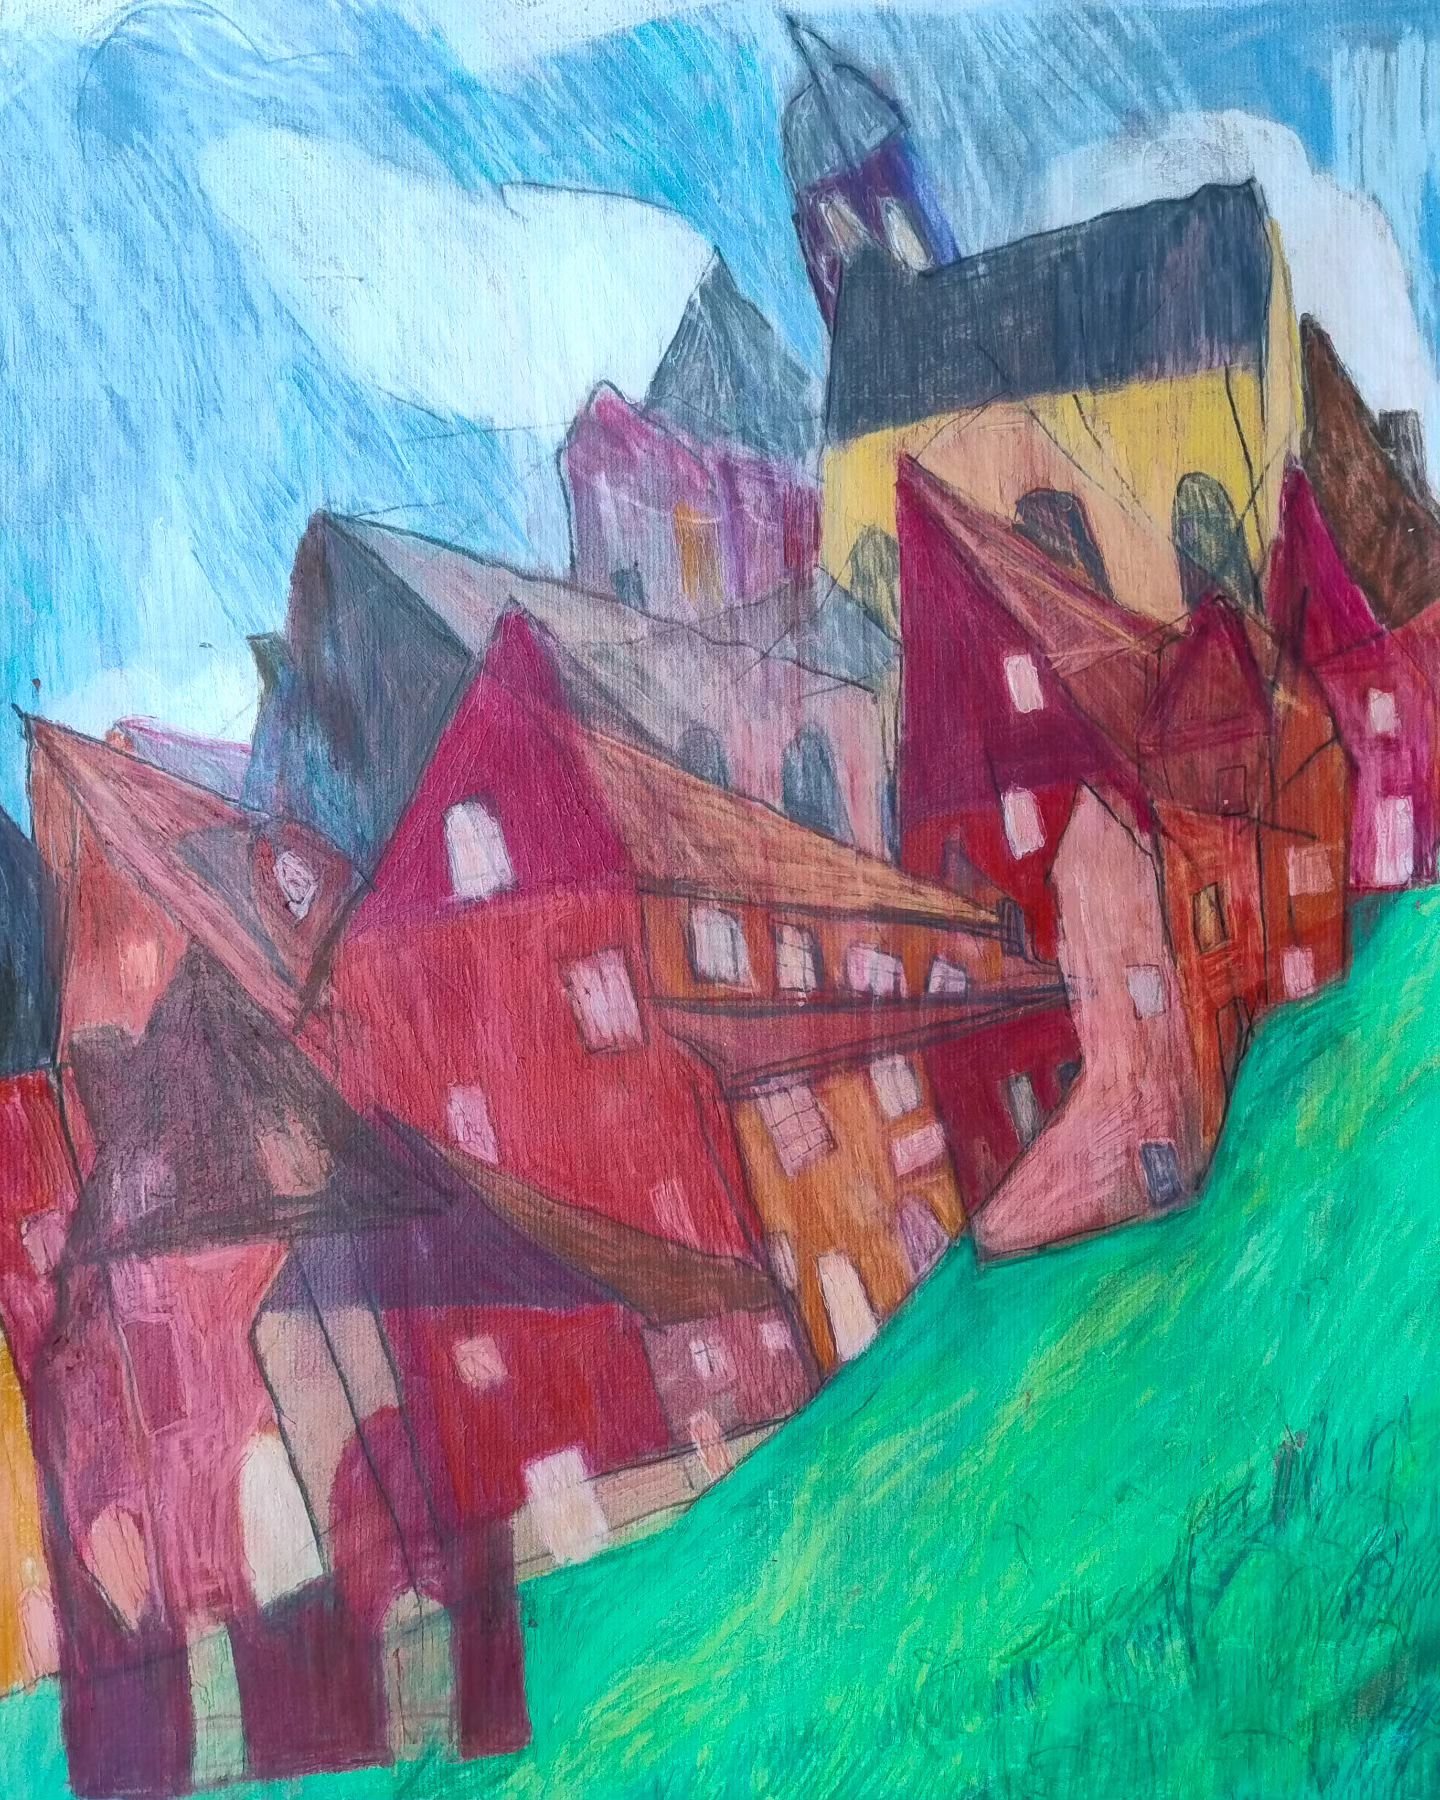 Kastellet red houses (2024)
Coloured pencils on paper
40x30cm
#drawing #redhouses #kastellet #copenhagen